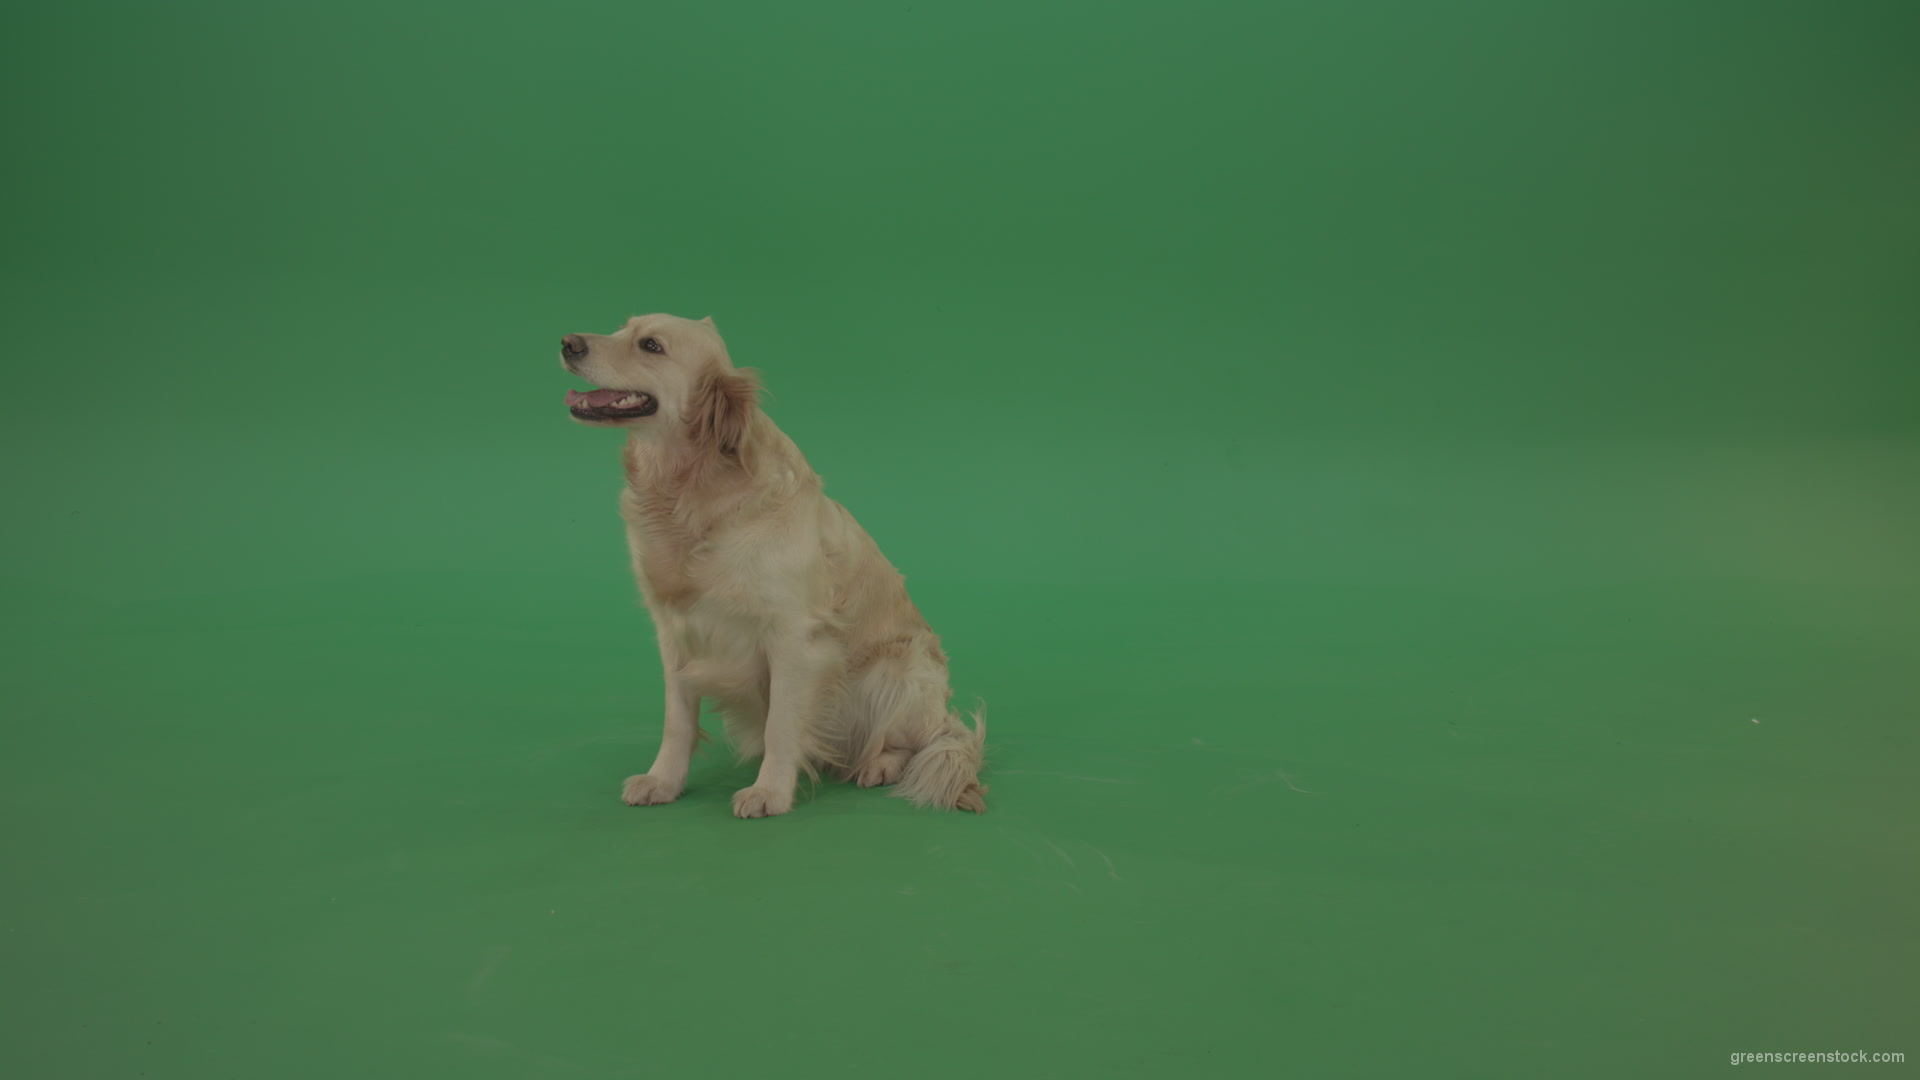 Golden-Retriever-Gun-Dog-sittin-and-eat-isolated-on-green-screen-4K-video-footage_006 Green Screen Stock